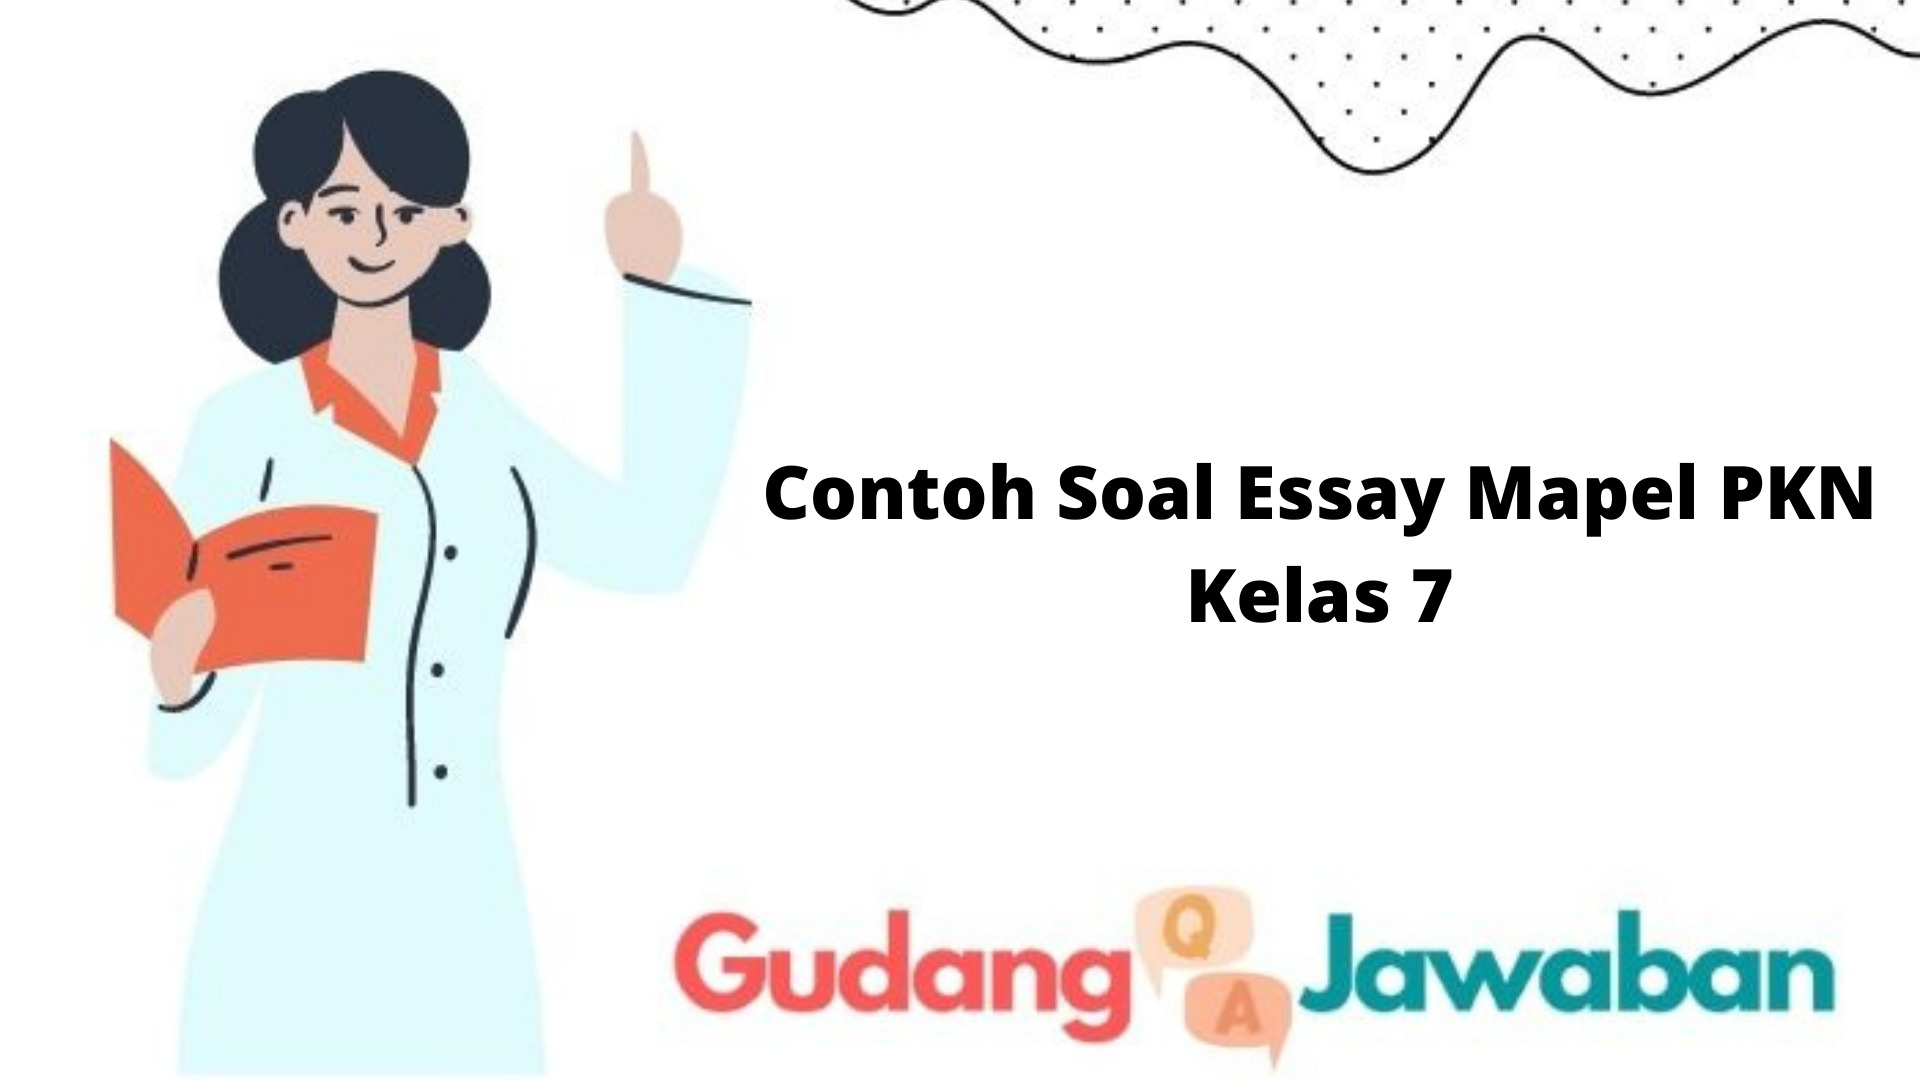 Contoh Soal Essay Mapel PKN Kelas 7